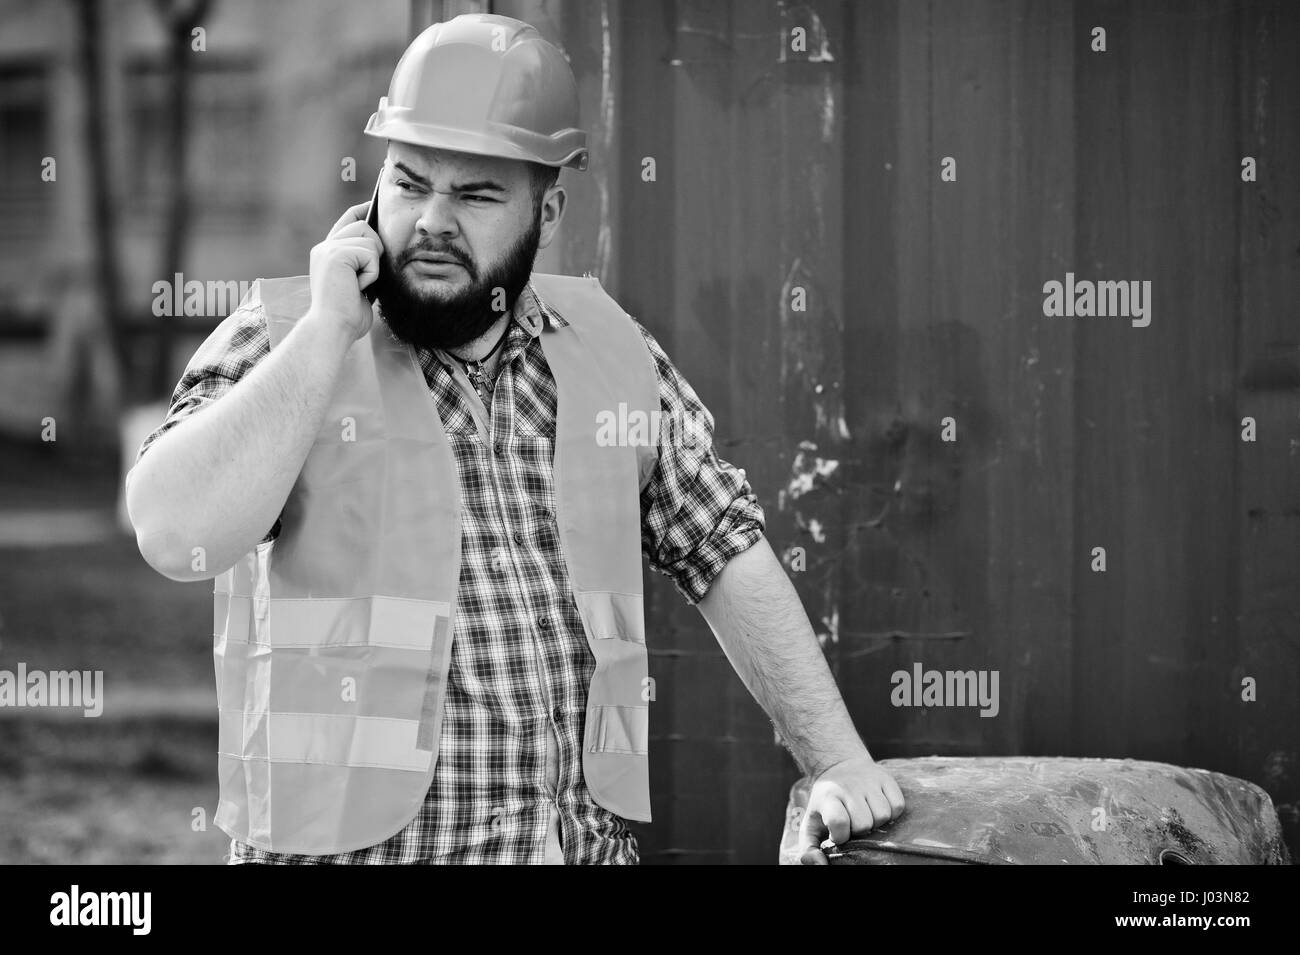 Brutal beard worker man suit construction worker in safety orange helmet near red barrel speak on phone. Stock Photo